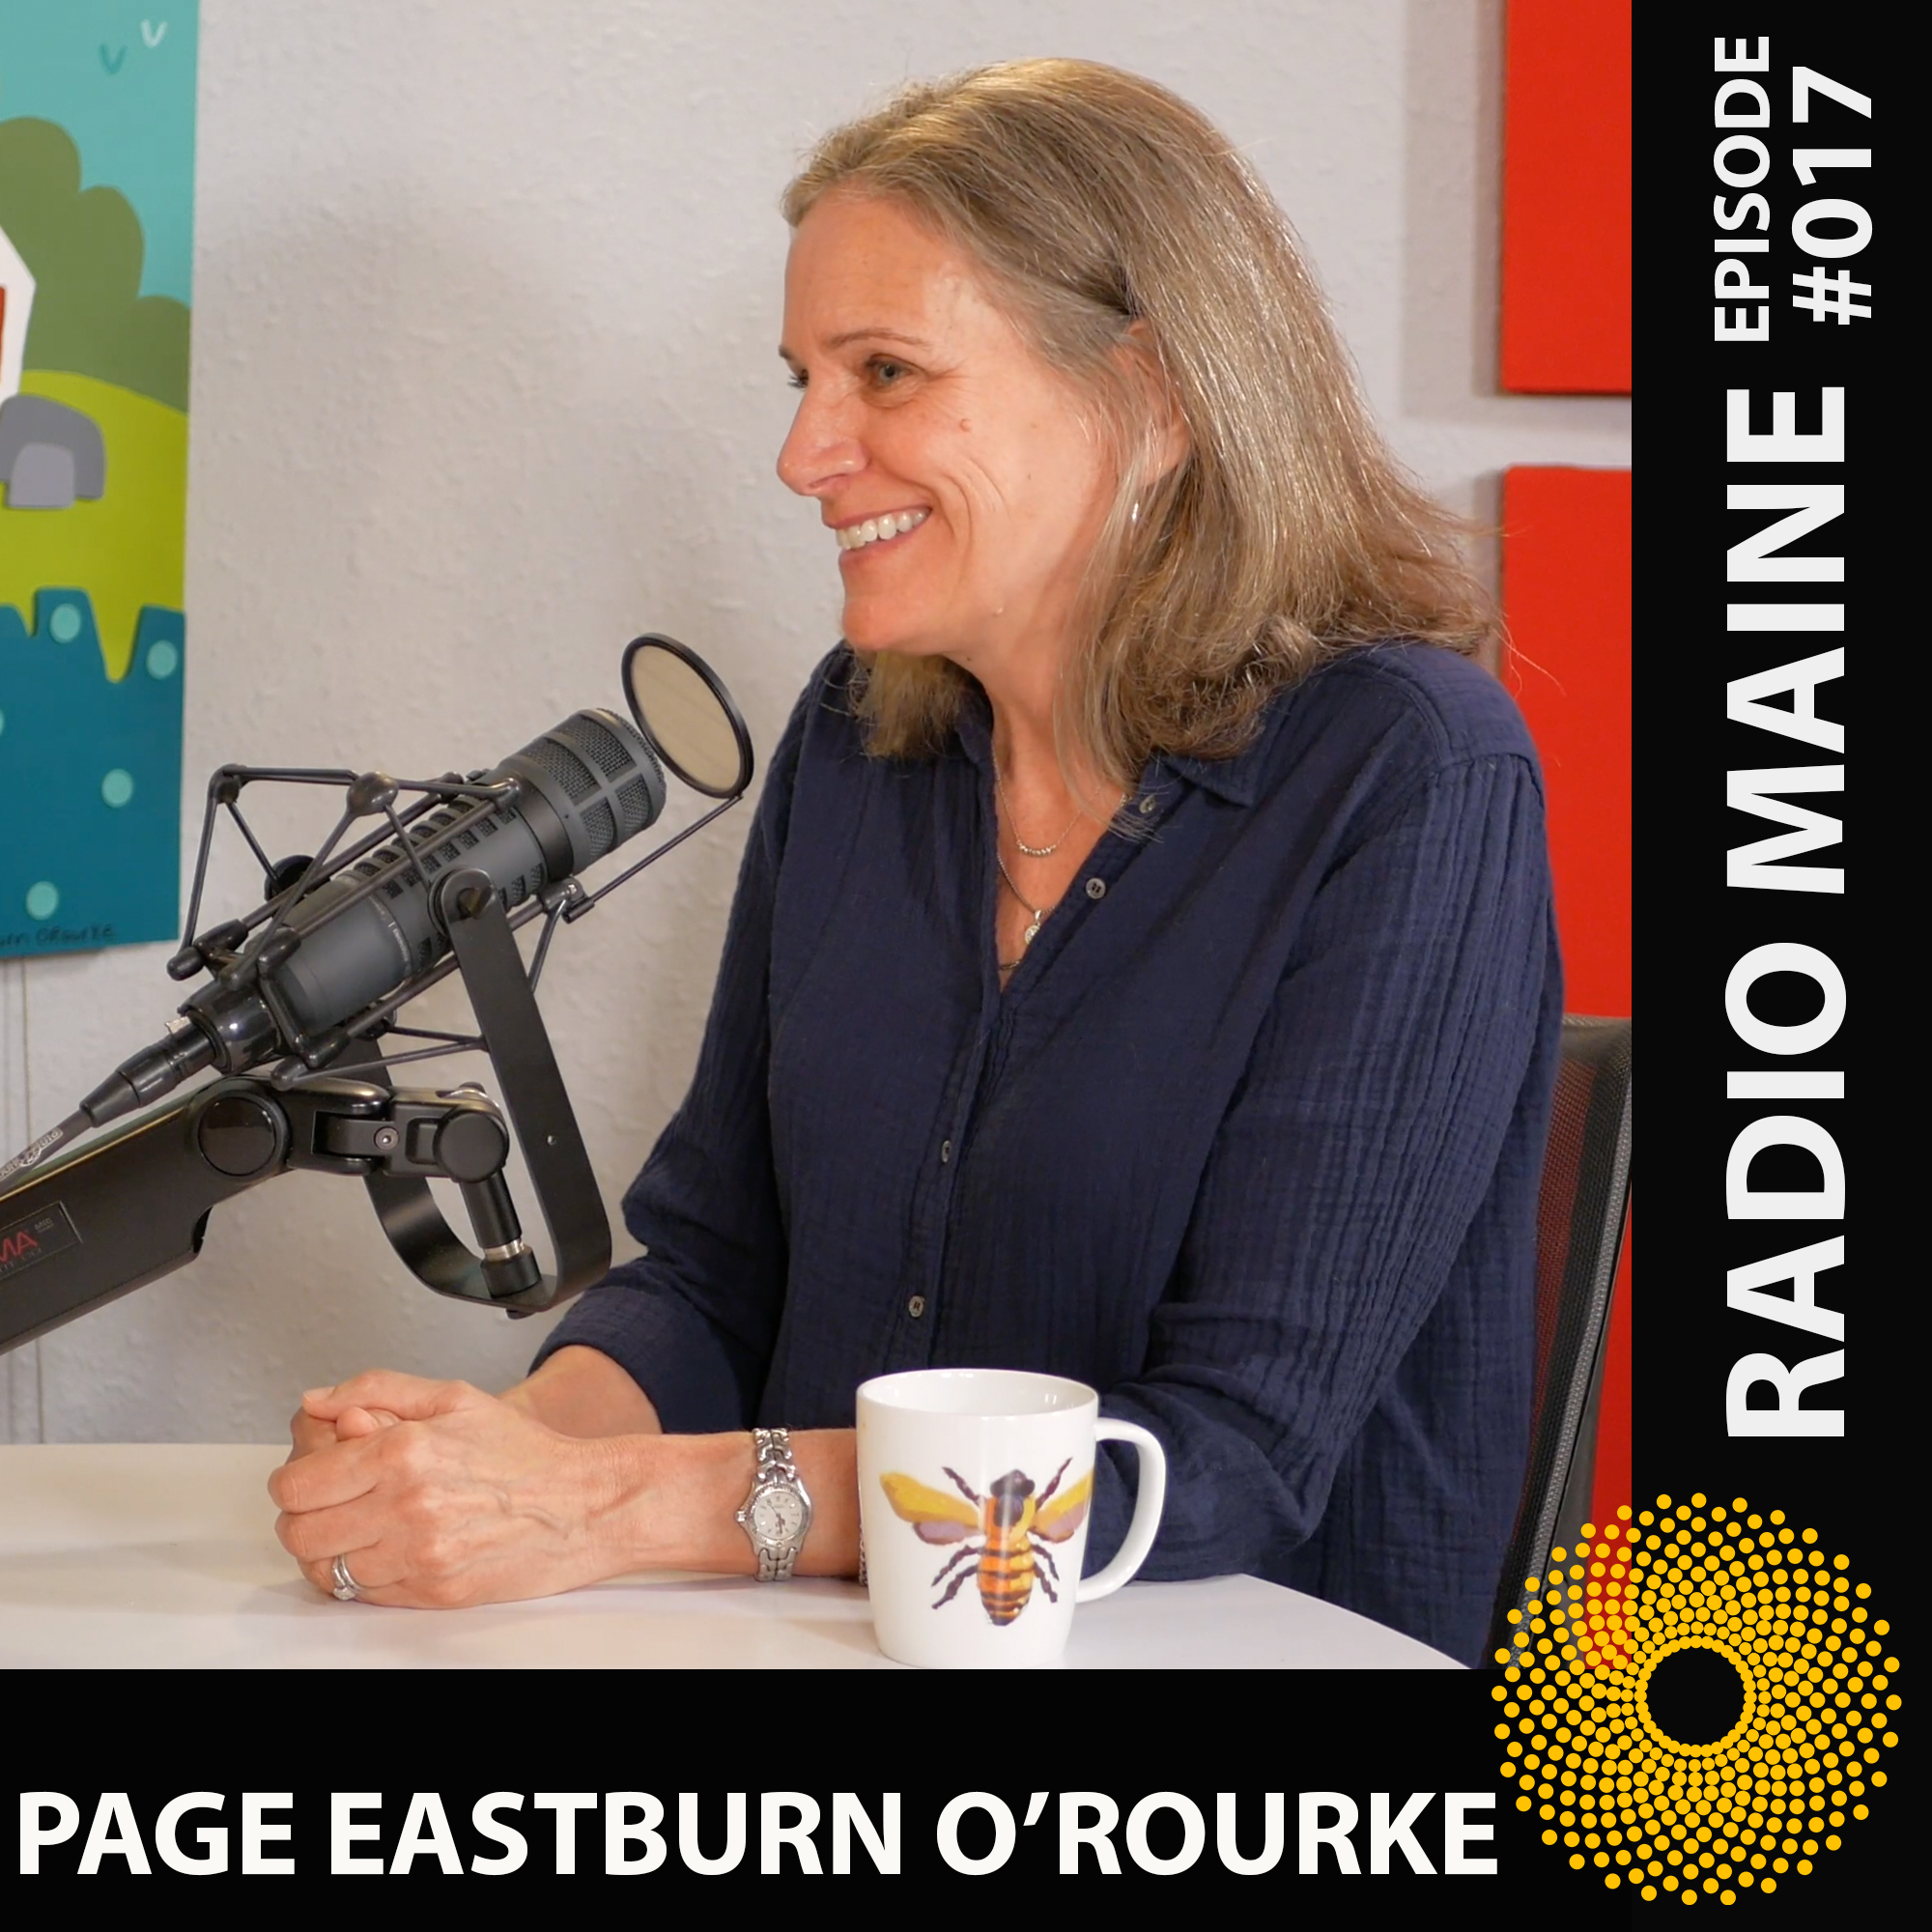 Maine artist Page Eastburn O'Rourke being interviewed on Radio Maine with Dr. Lisa Belisle